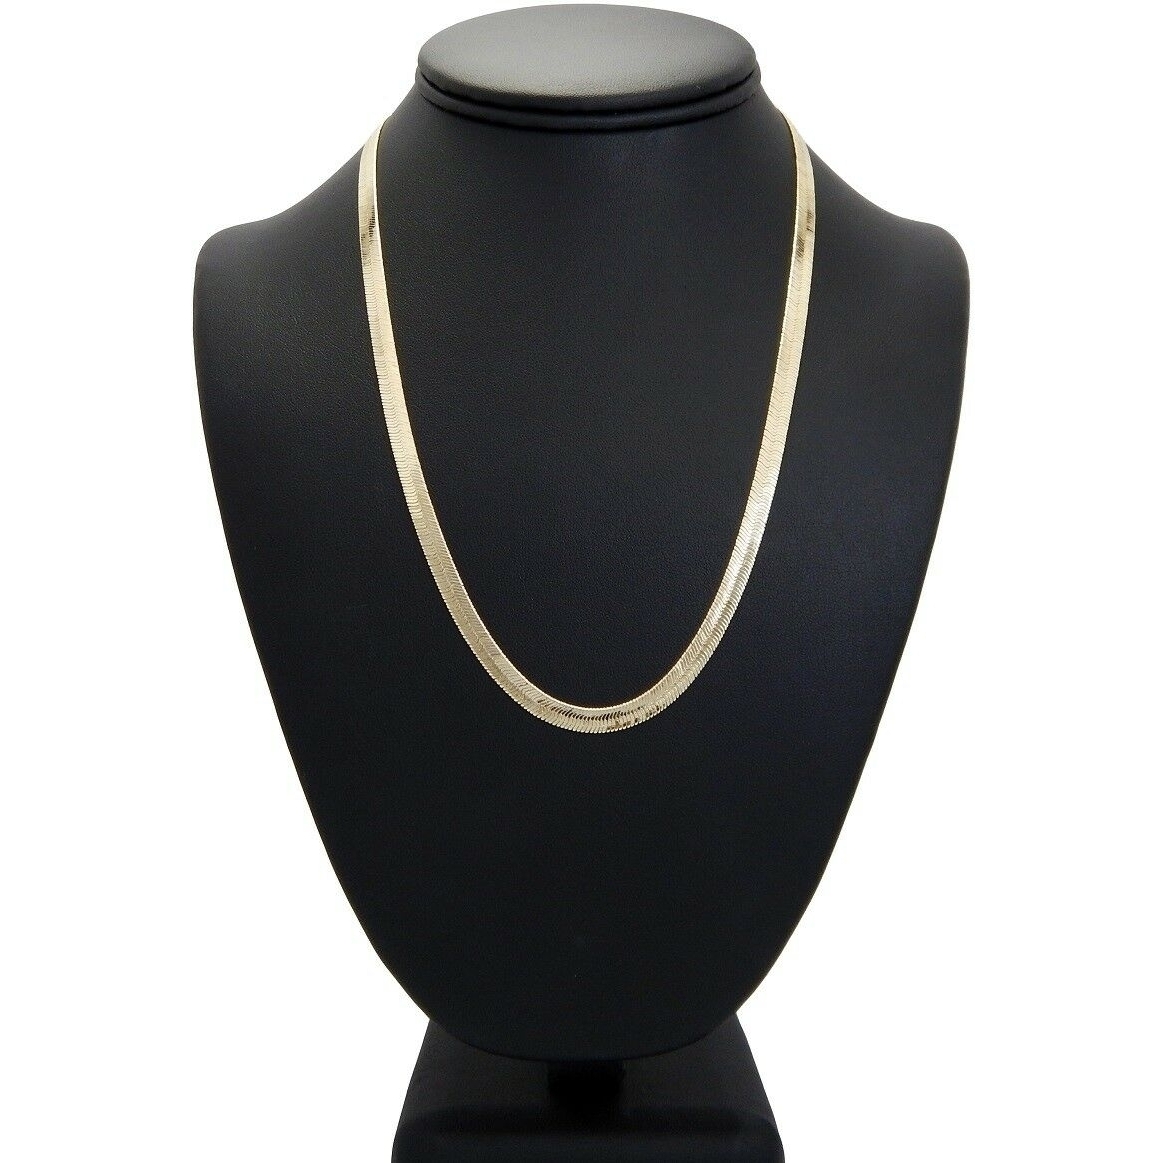 Herringbone Chain Necklace 5mm Width 18 20 24 30 Inch 14K Gold Filled High Polish Finsh High Finish Polished - 20''